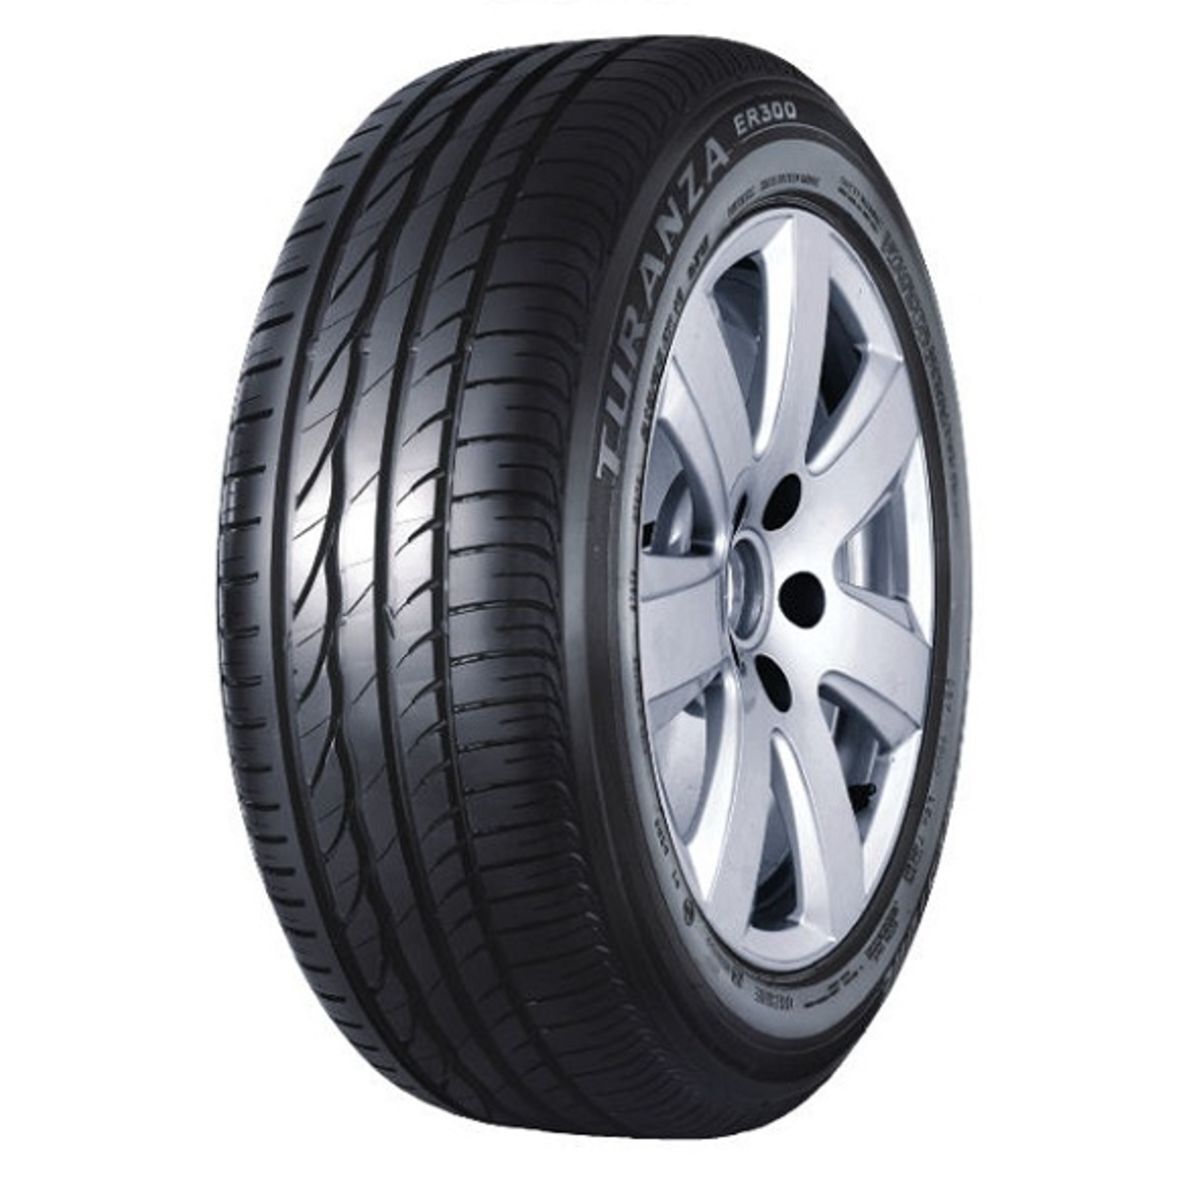 Neumáticos de verano BRIDGESTONE Turanza ER300 225/55R16 XL 99W